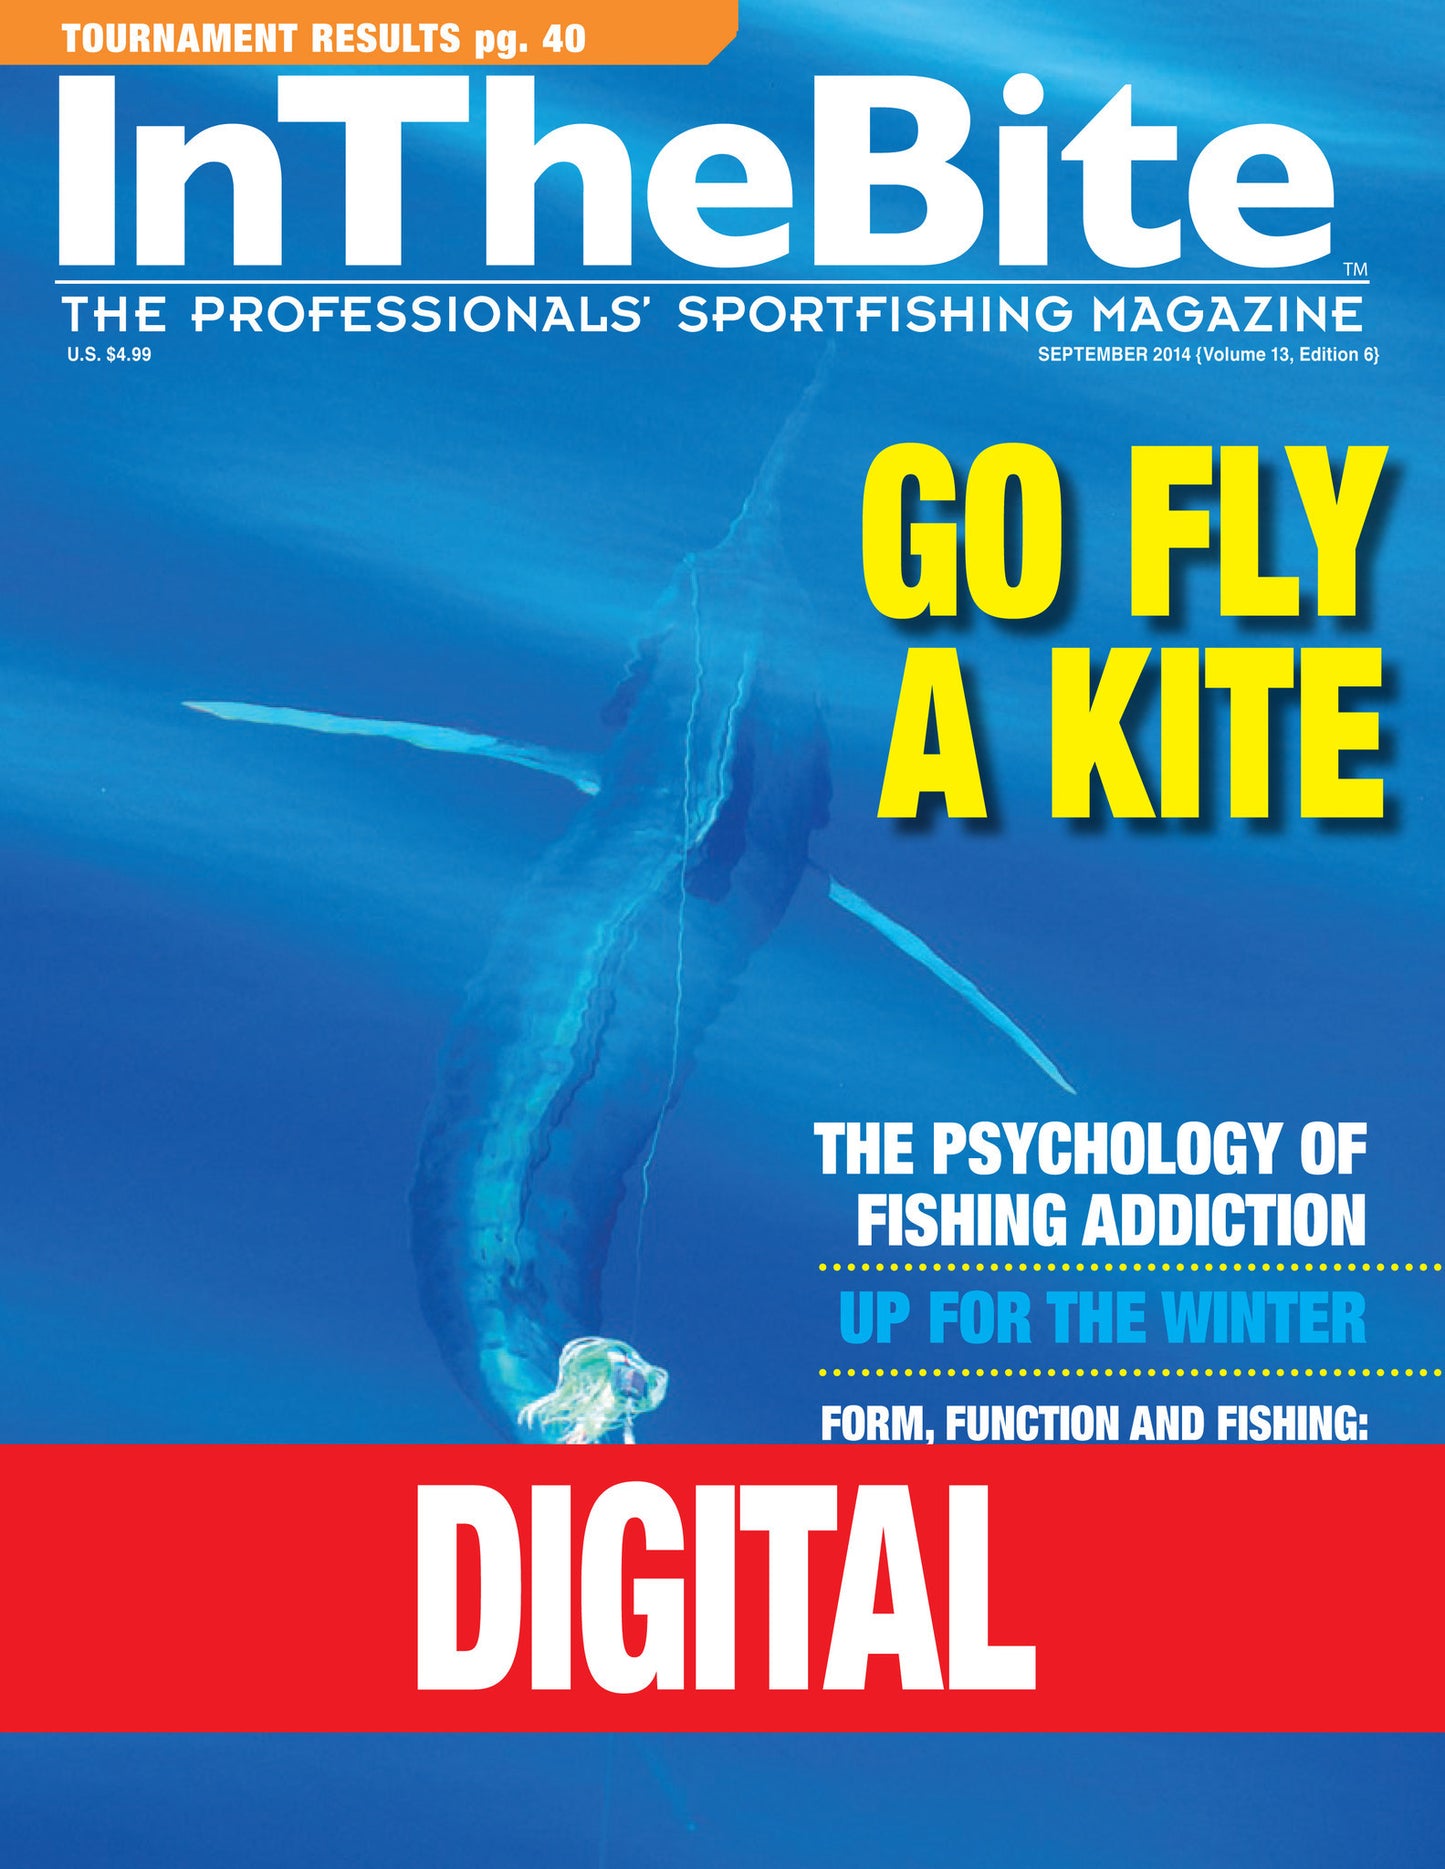 InTheBite Volume 14 Edition 05 - July/August 2015 - Digital Edition